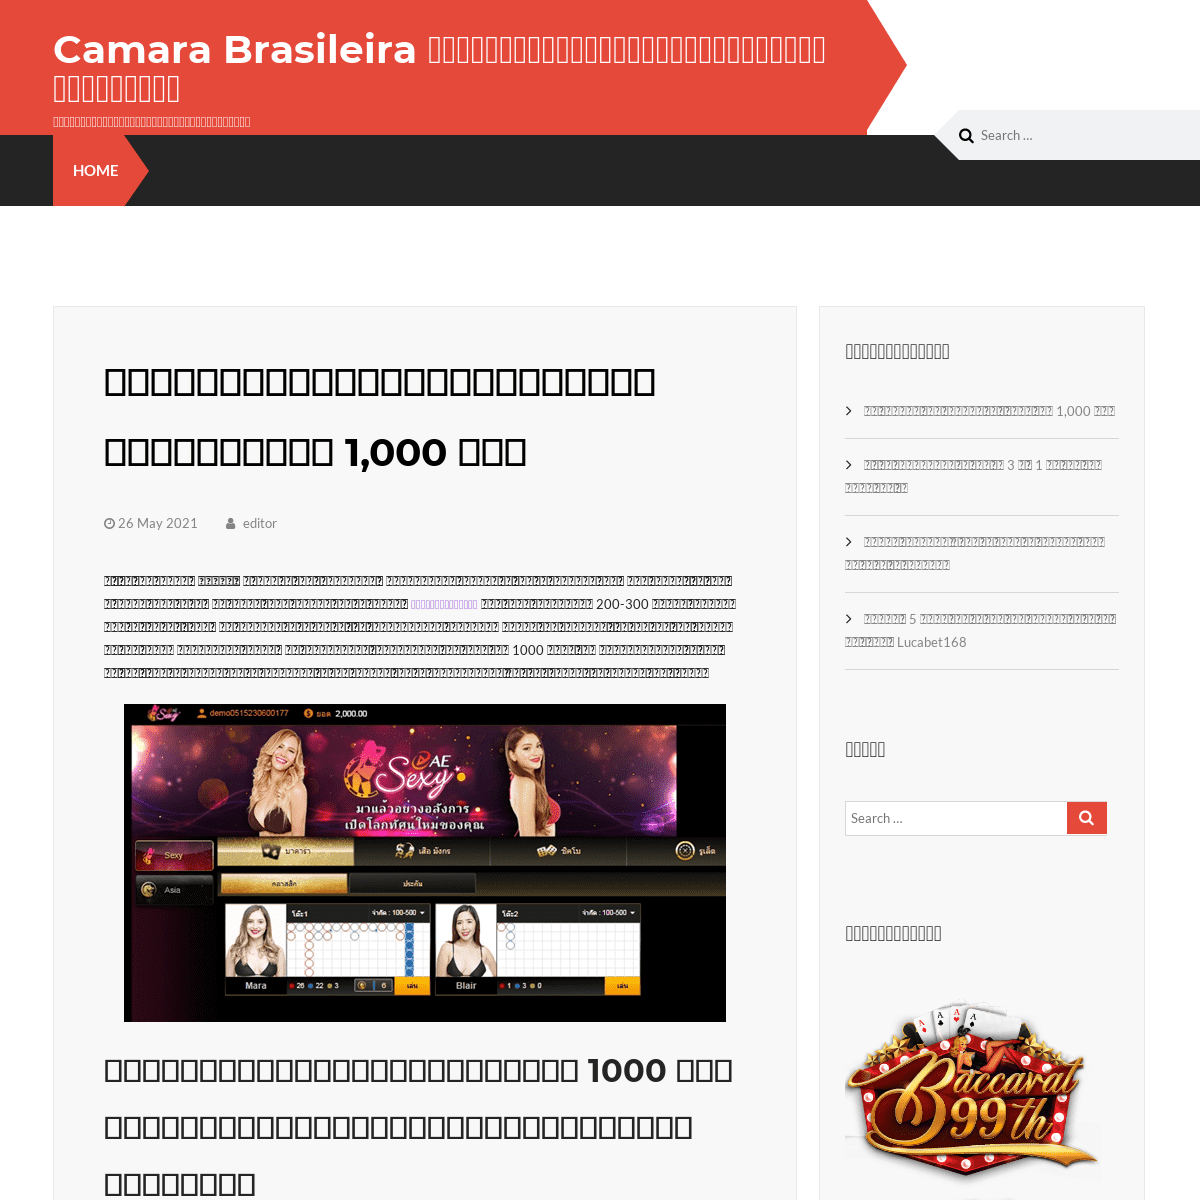 A complete backup of https://camarabrasileira.com